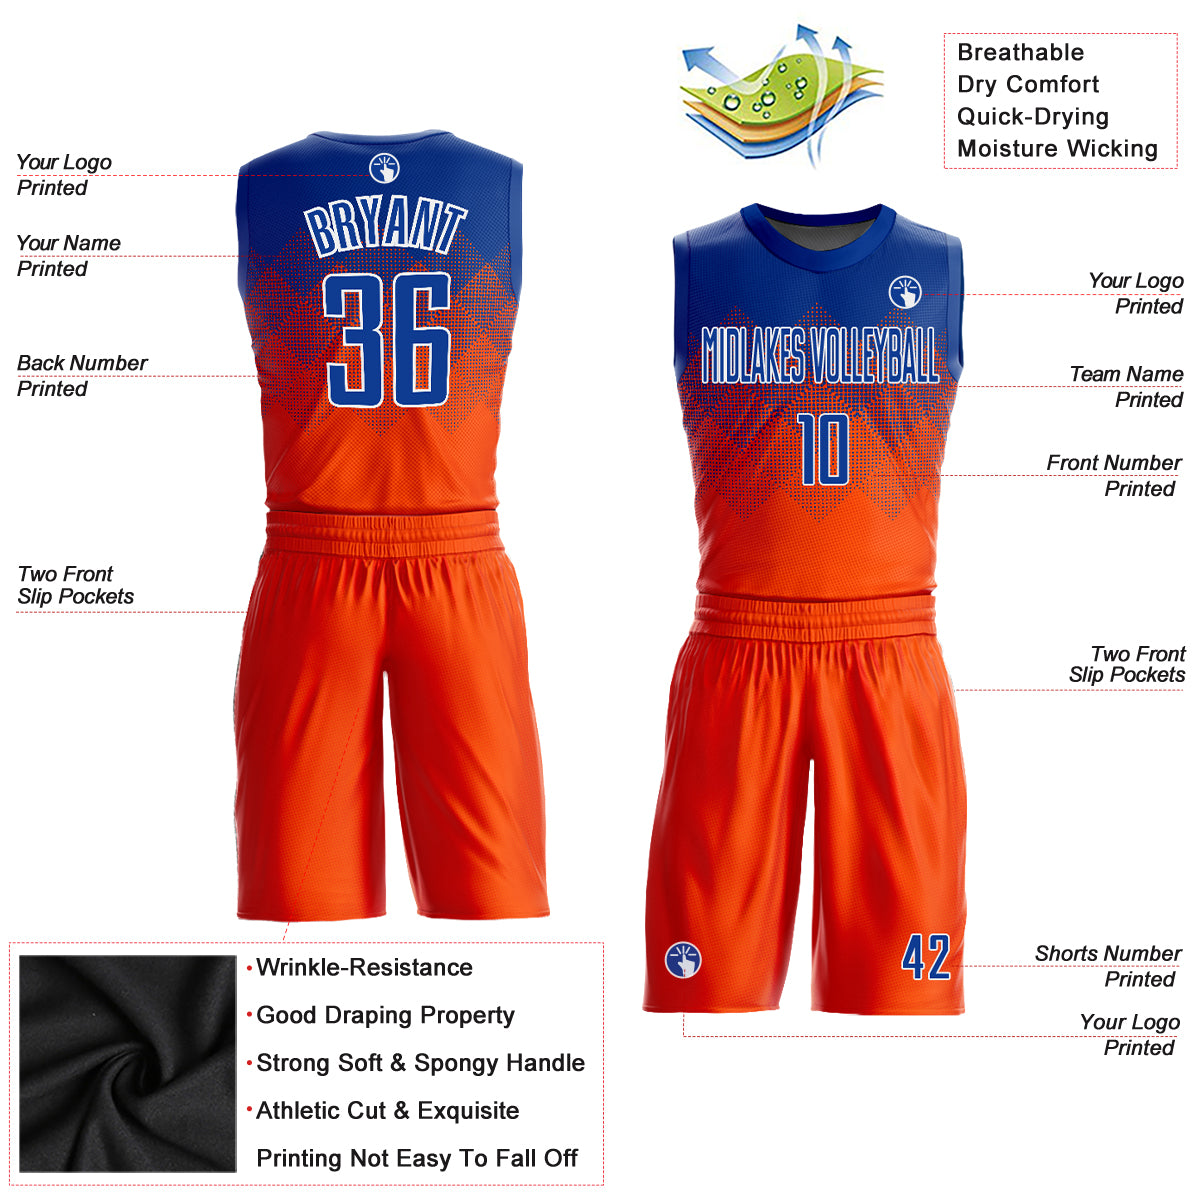 Orange Blue Custom Sublimation Basketball Jerseys & Shorts | YoungSpeeds Mens